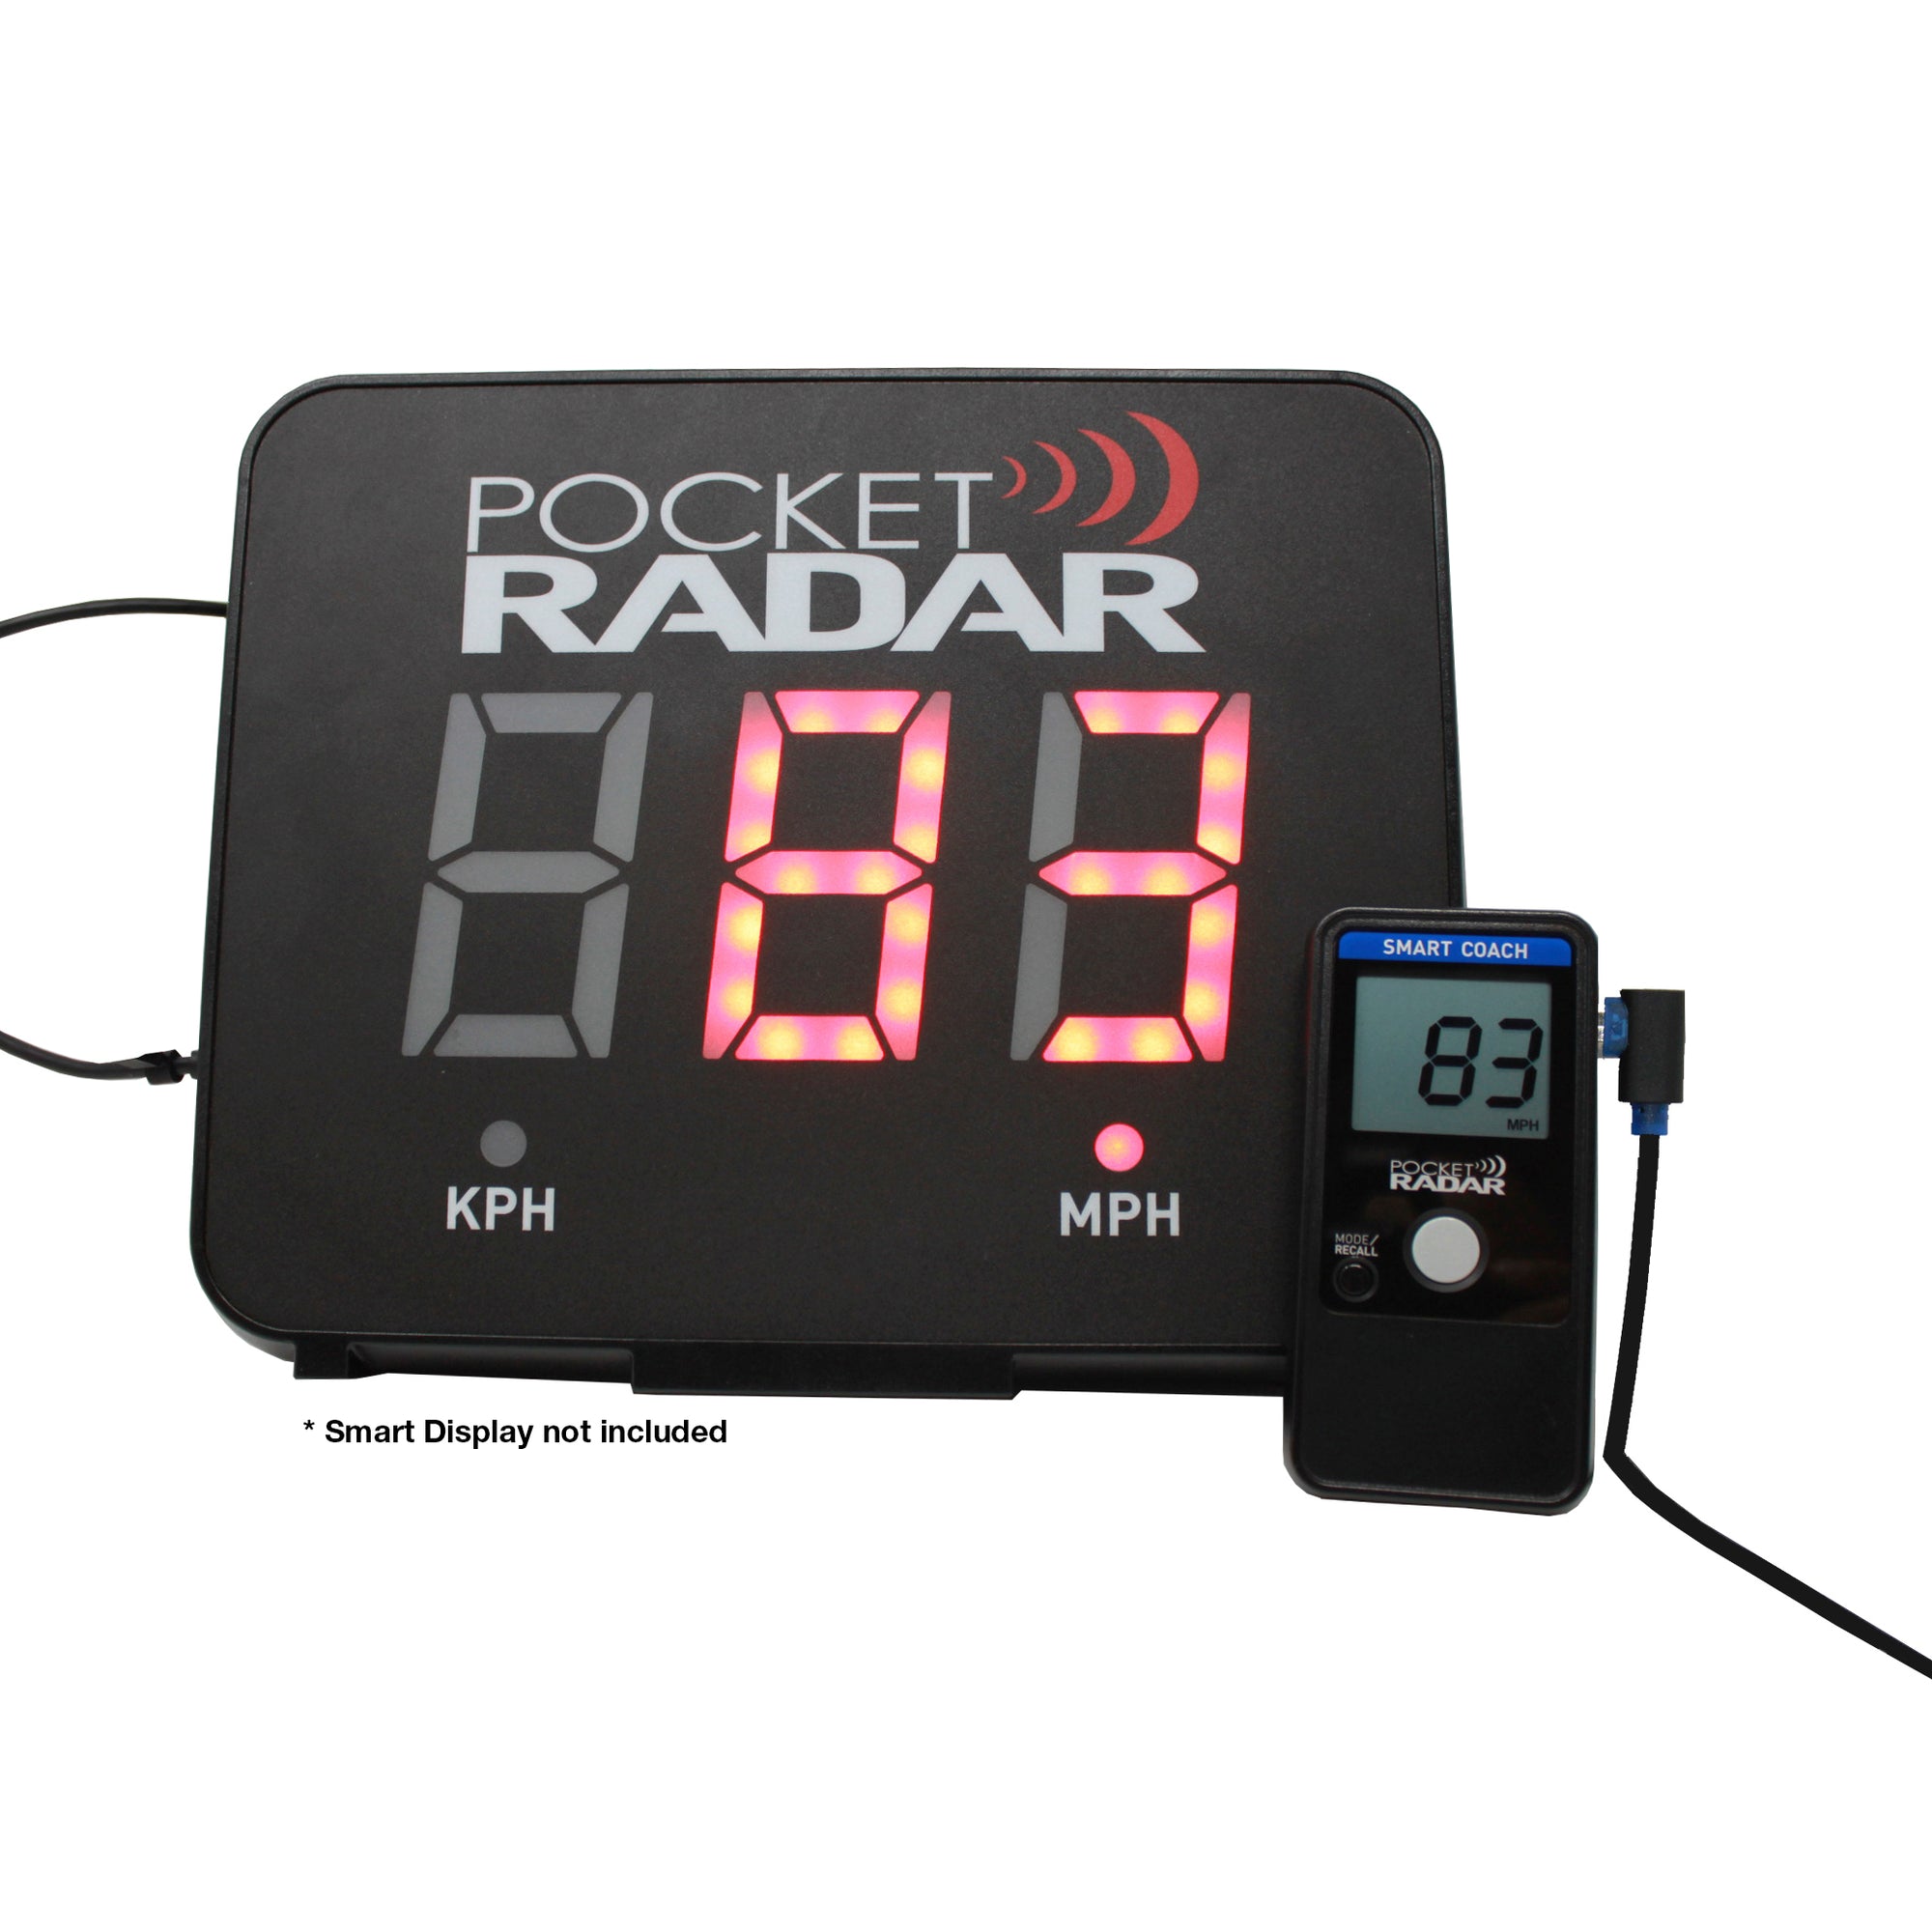 smart coach pocket radar used